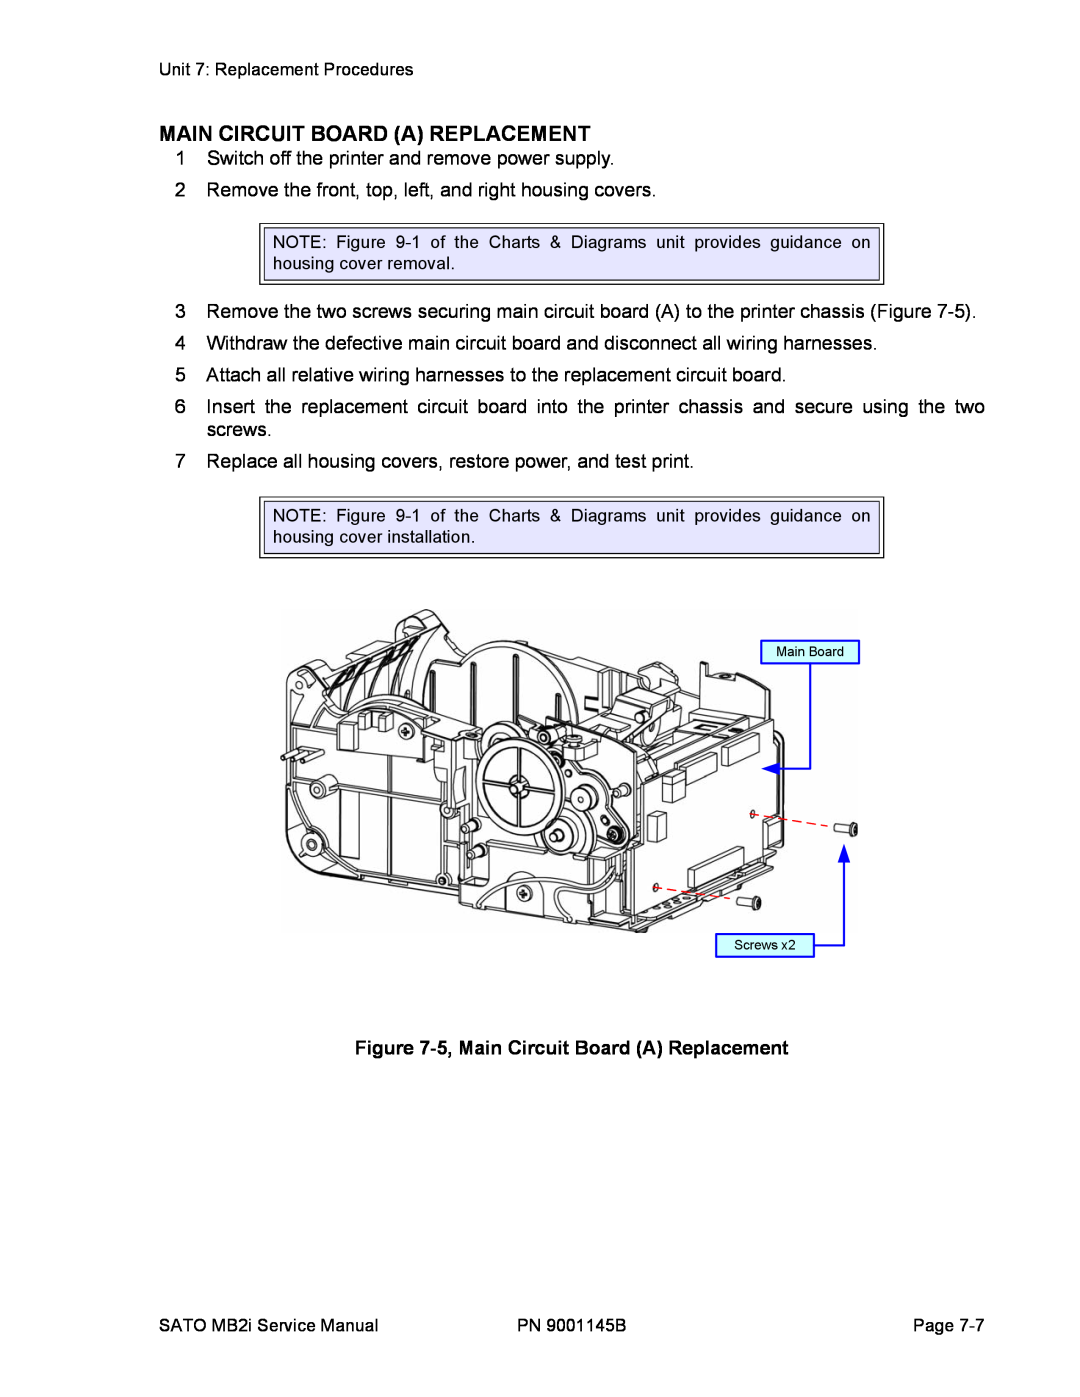 SATO 200i manual 5, Main Circuit Board A Replacement 